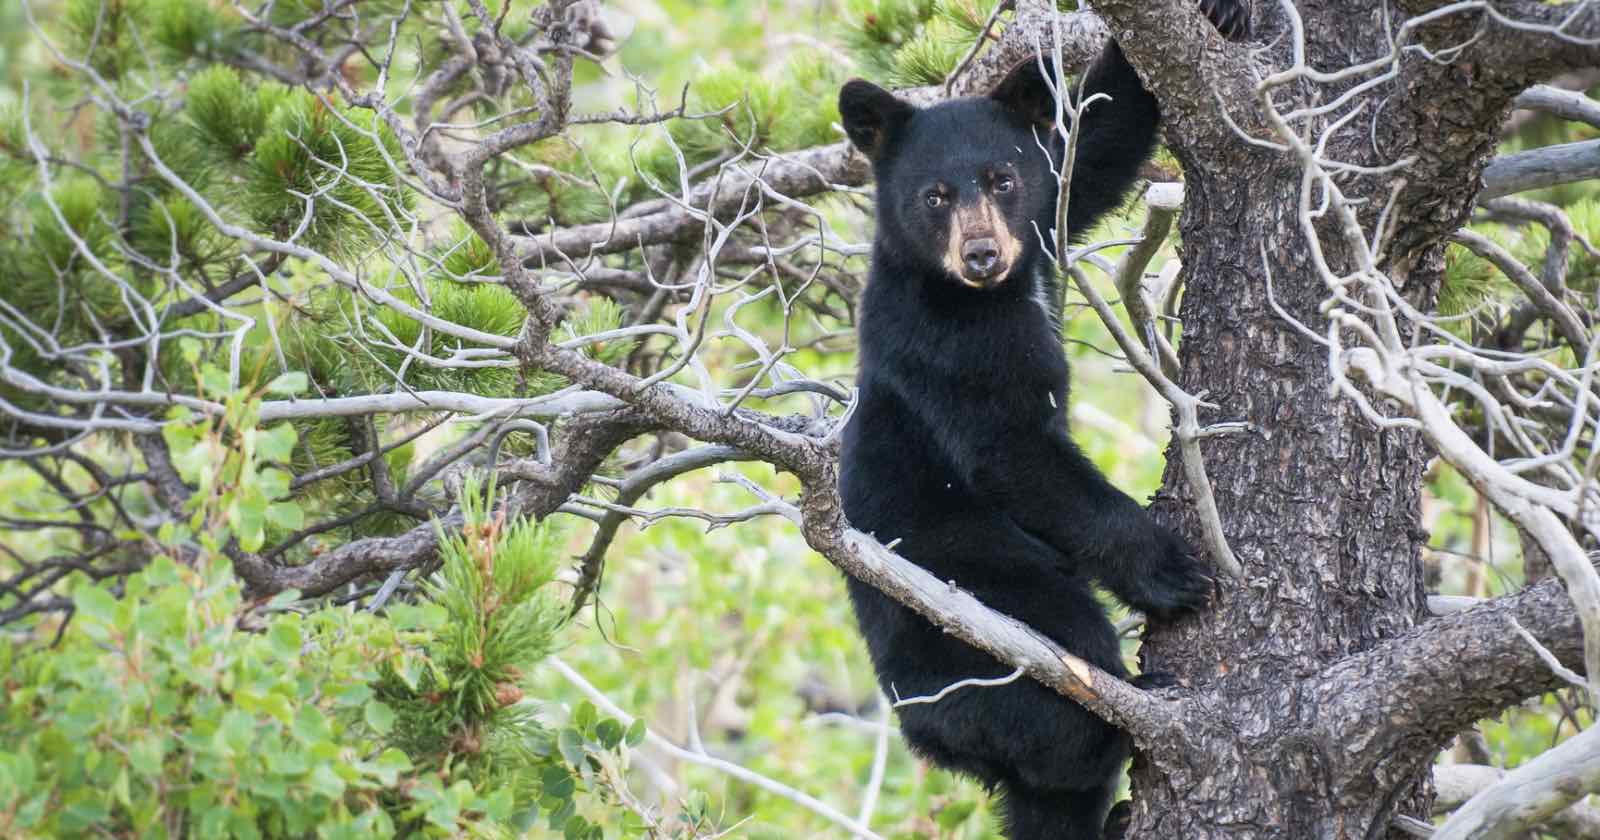 selfie-takers-rip-bear-cubs-from-tree-photos.jpg